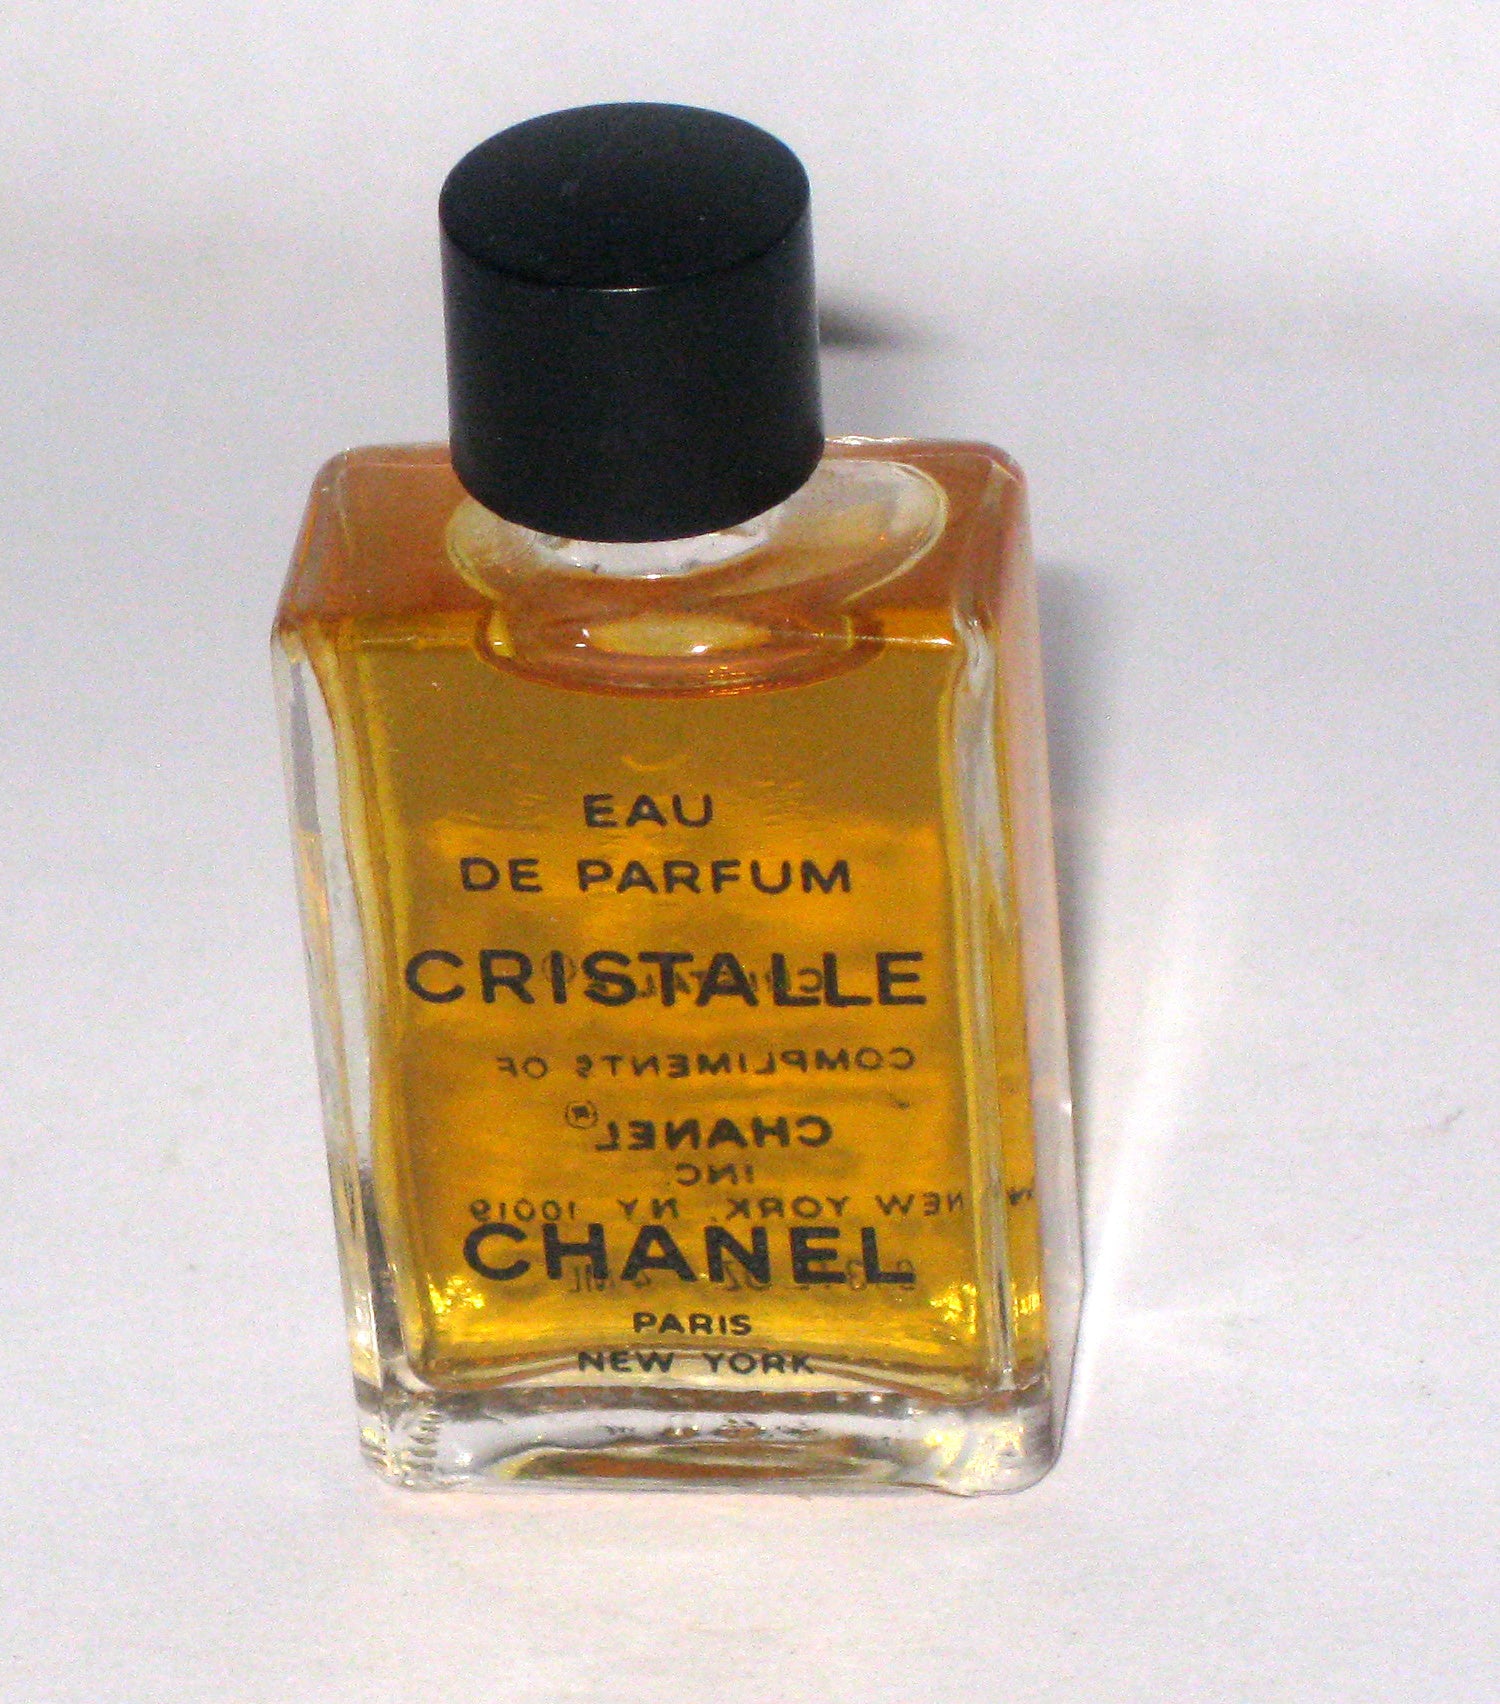 Chanel Cristalle Eau De Toilette 100 Ml. Perfume for Women 